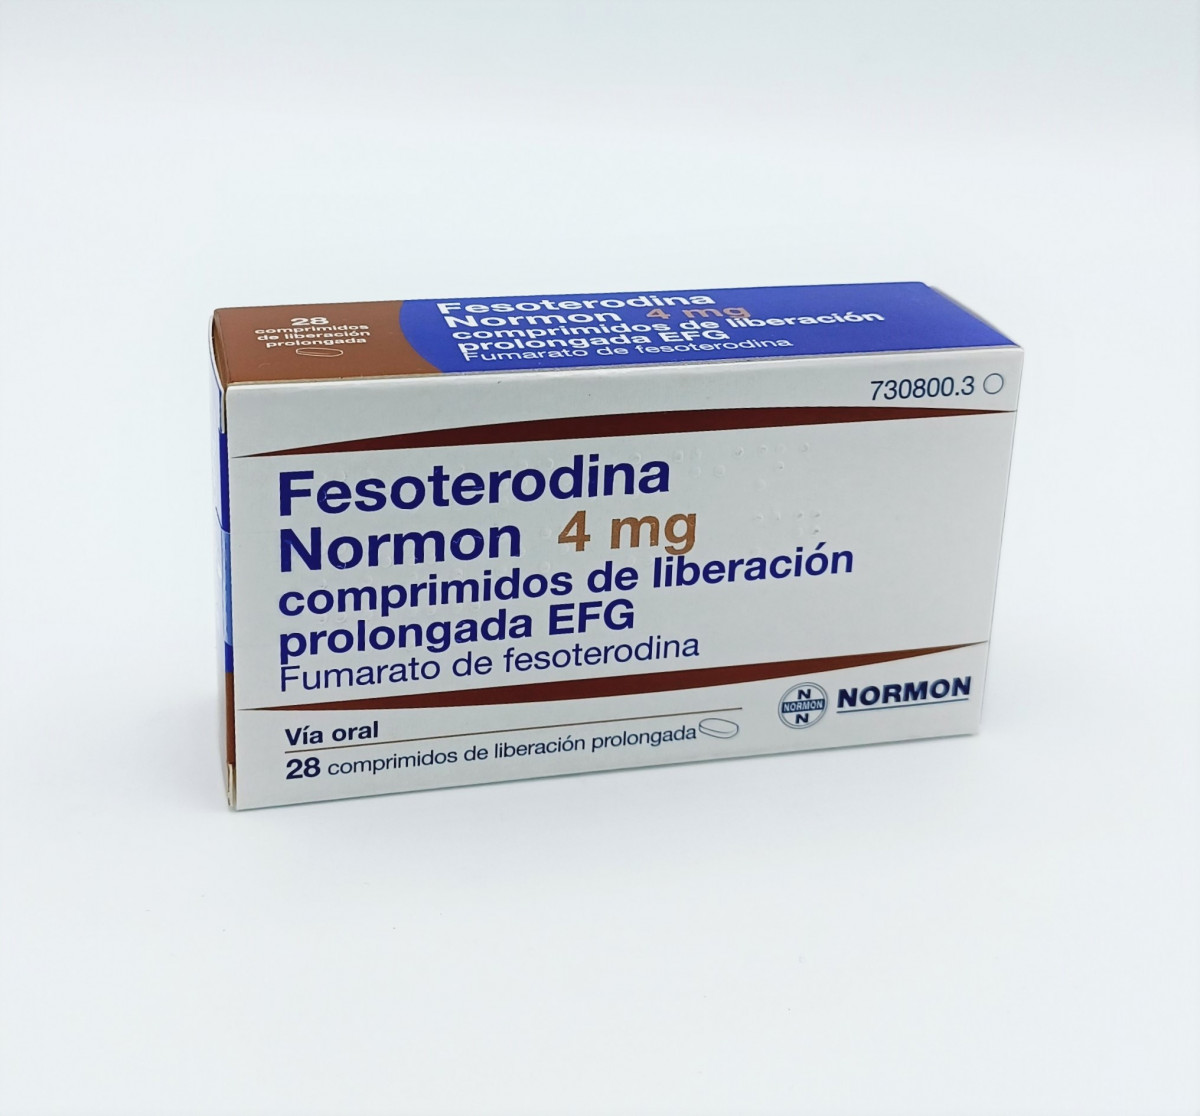 FESOTERODINA NORMON 4 MG COMPRIMIDOS DE LIBERACION PROLONGADA EFG, 28 comprimidos fotografía del envase.